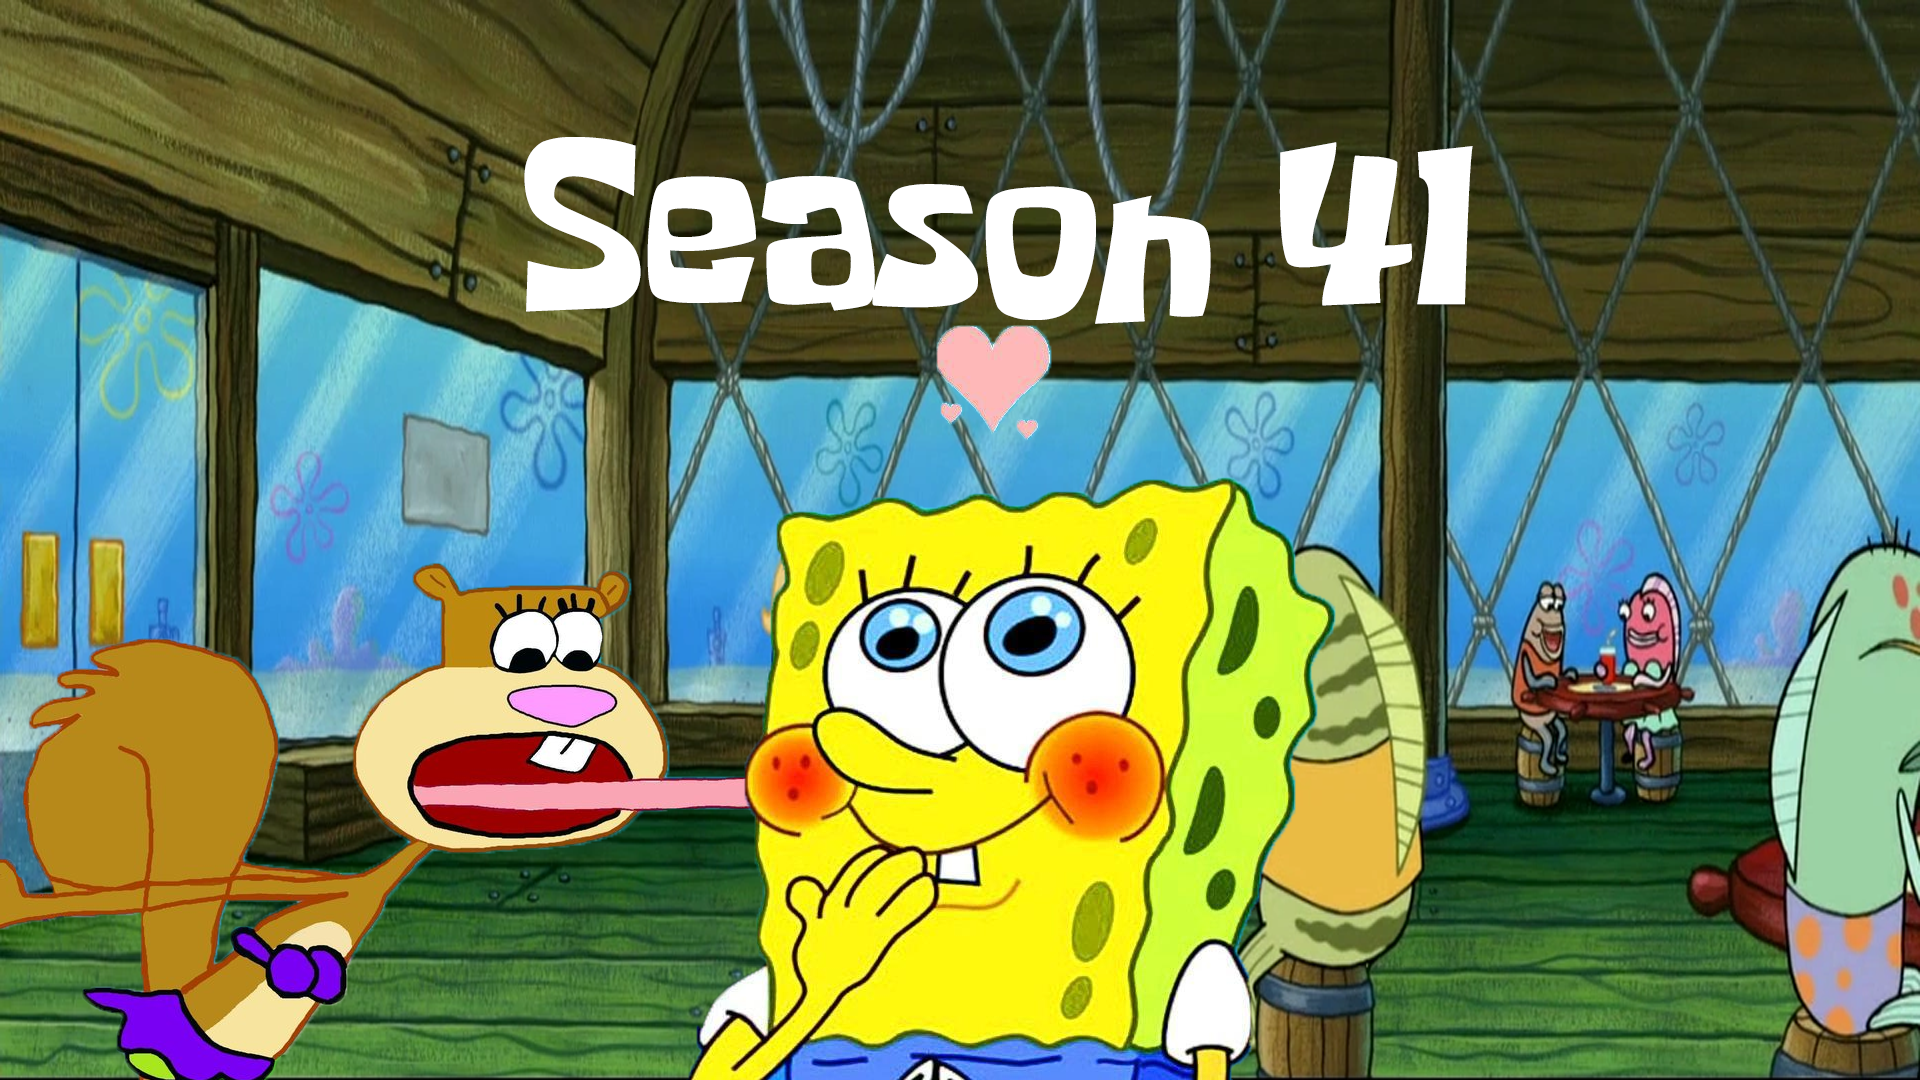 This is the 41st season of SpongeBob SquarePants. 